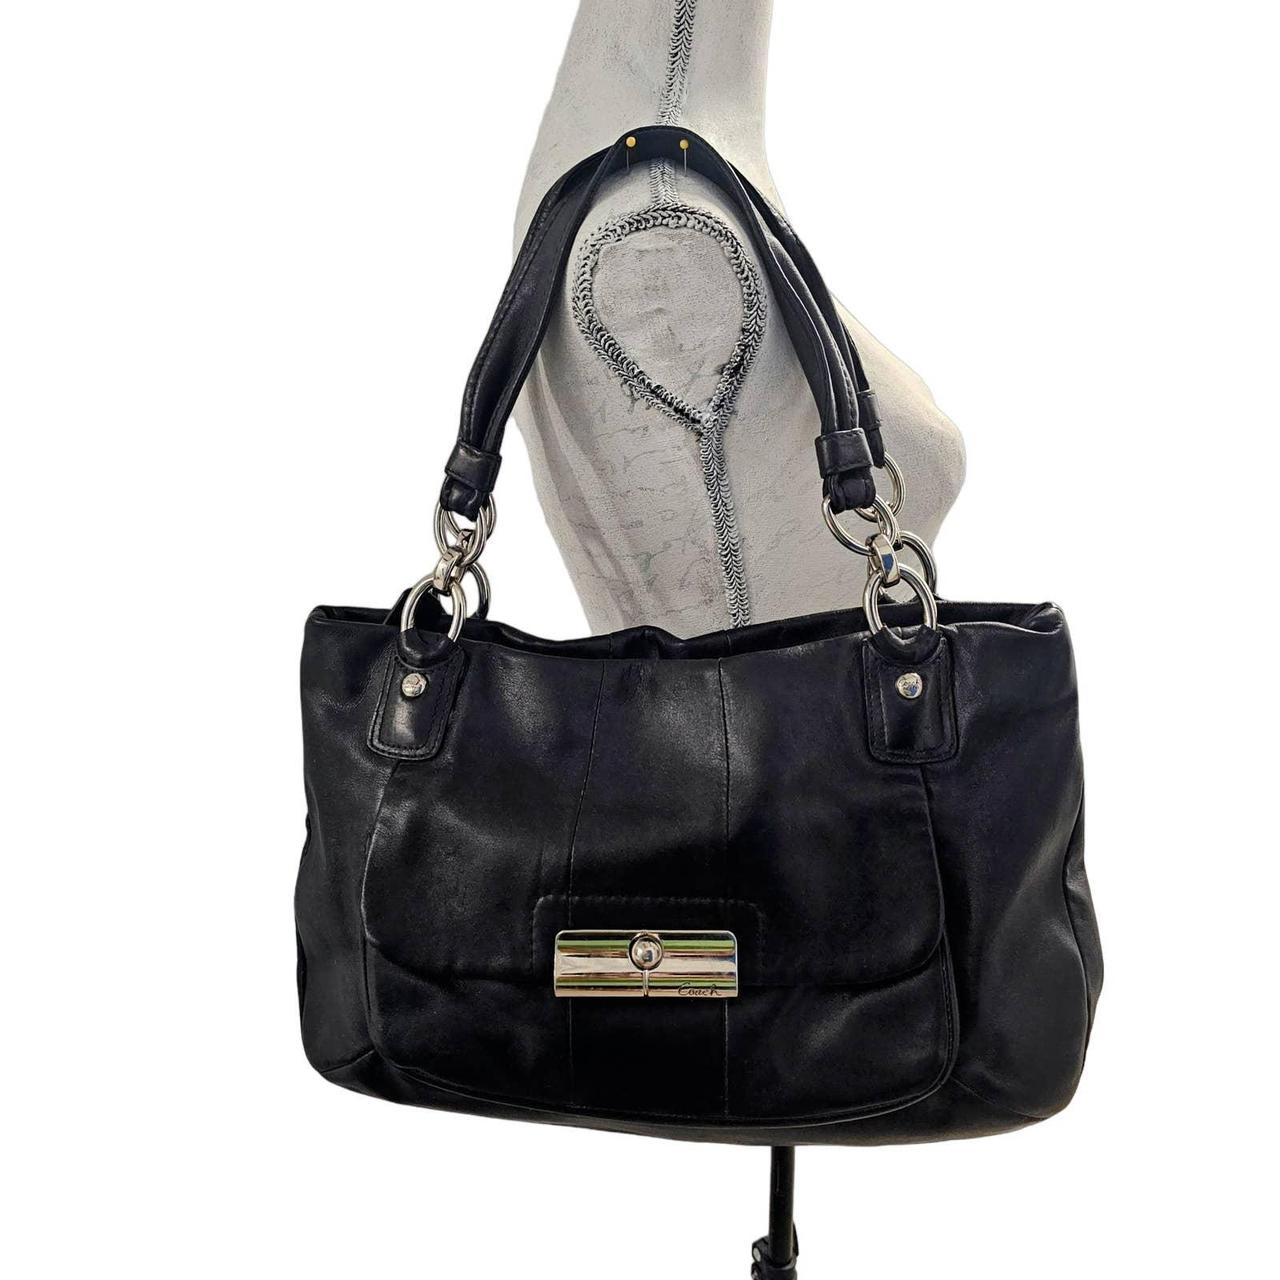 Leather Black COACH Shoulder Bag with Silver Hardware